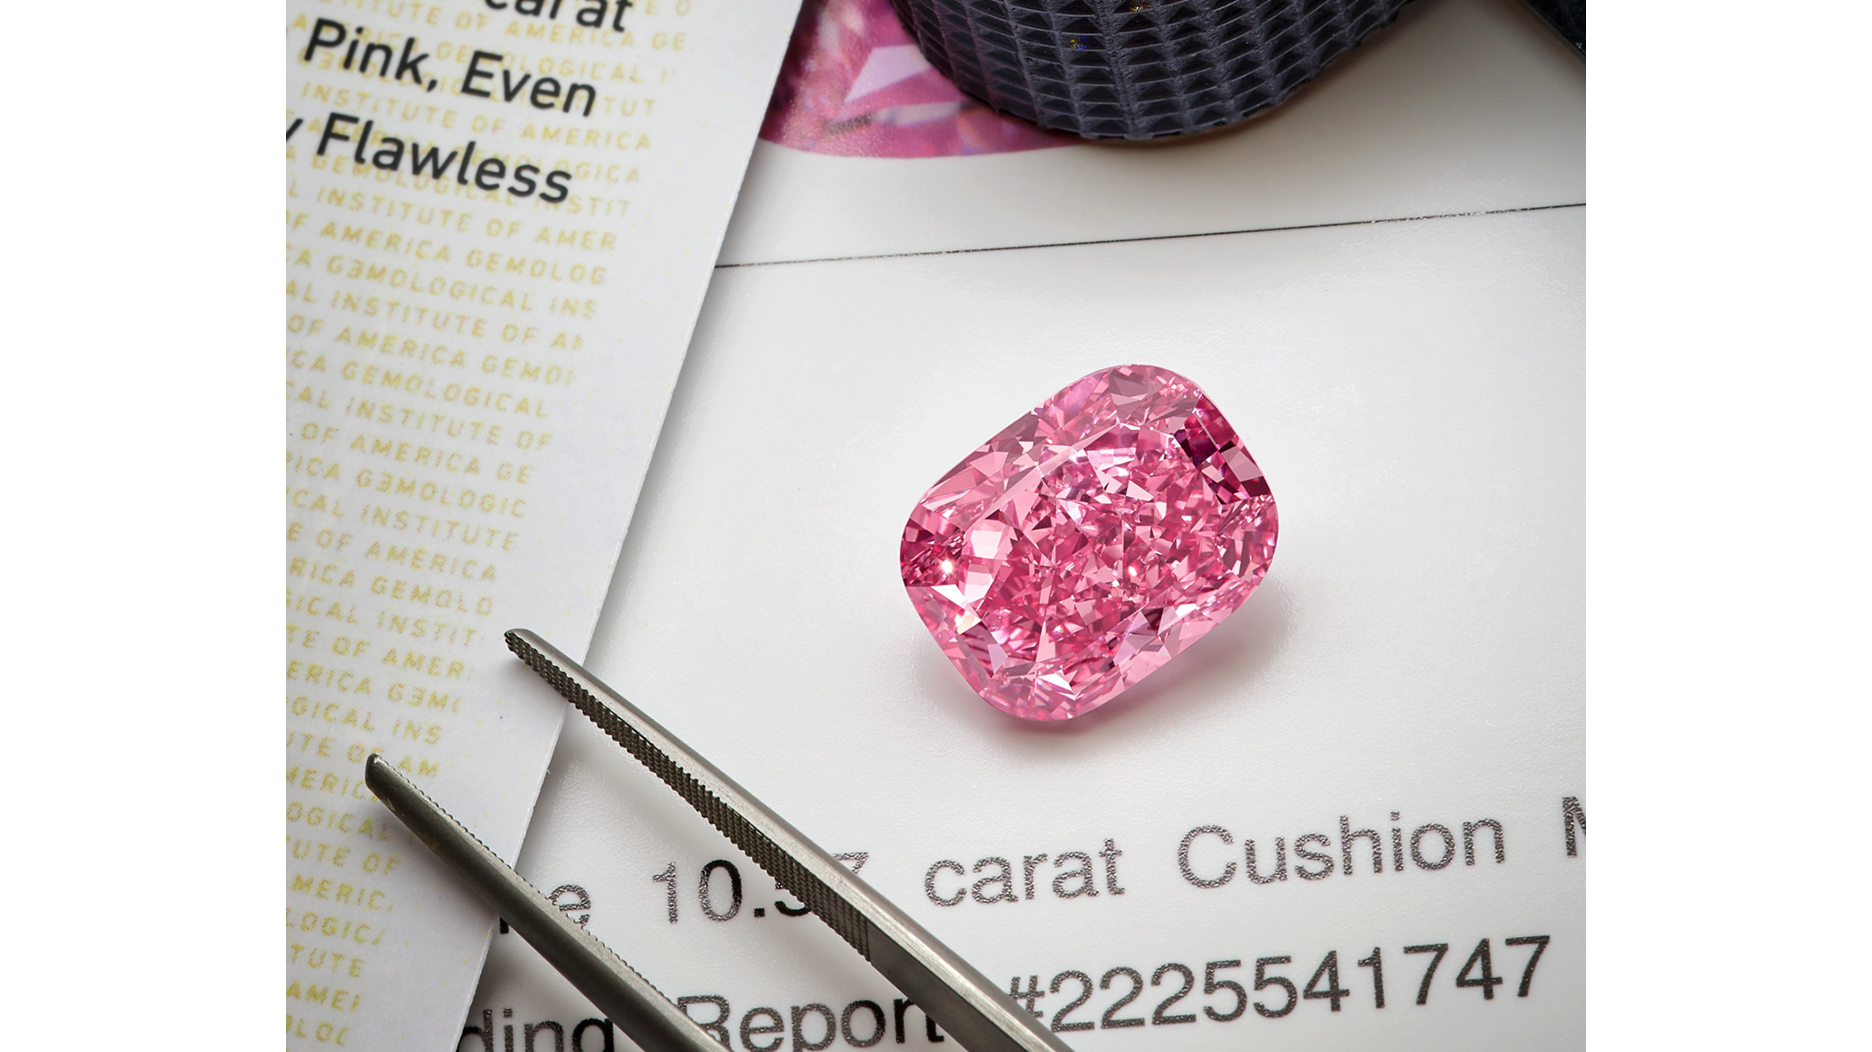 Estrela de Fura' Ruby, Purplish Pink Diamond Sell For $30M+ Each